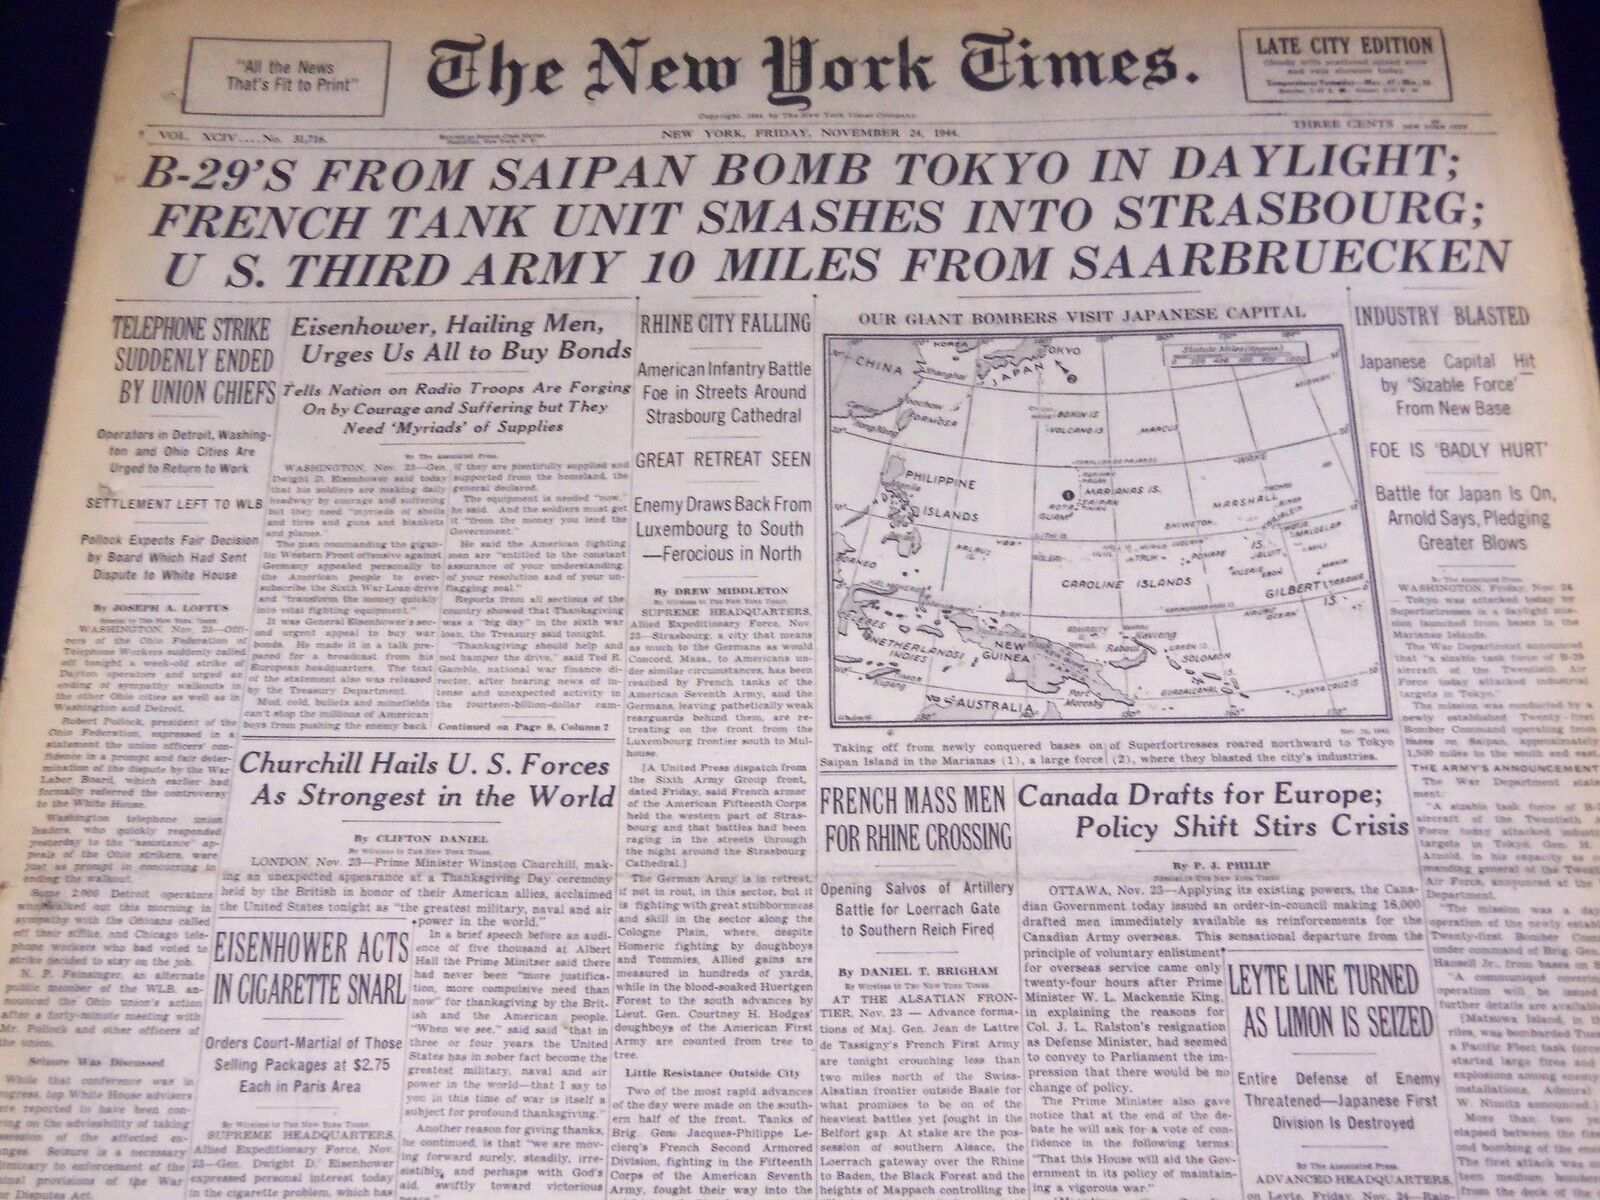 1944 NOV 24 NEW YORK TIMES U. S. THIRD ARMY 10 MILES FROM SAARBRUECKEN - NT 1794